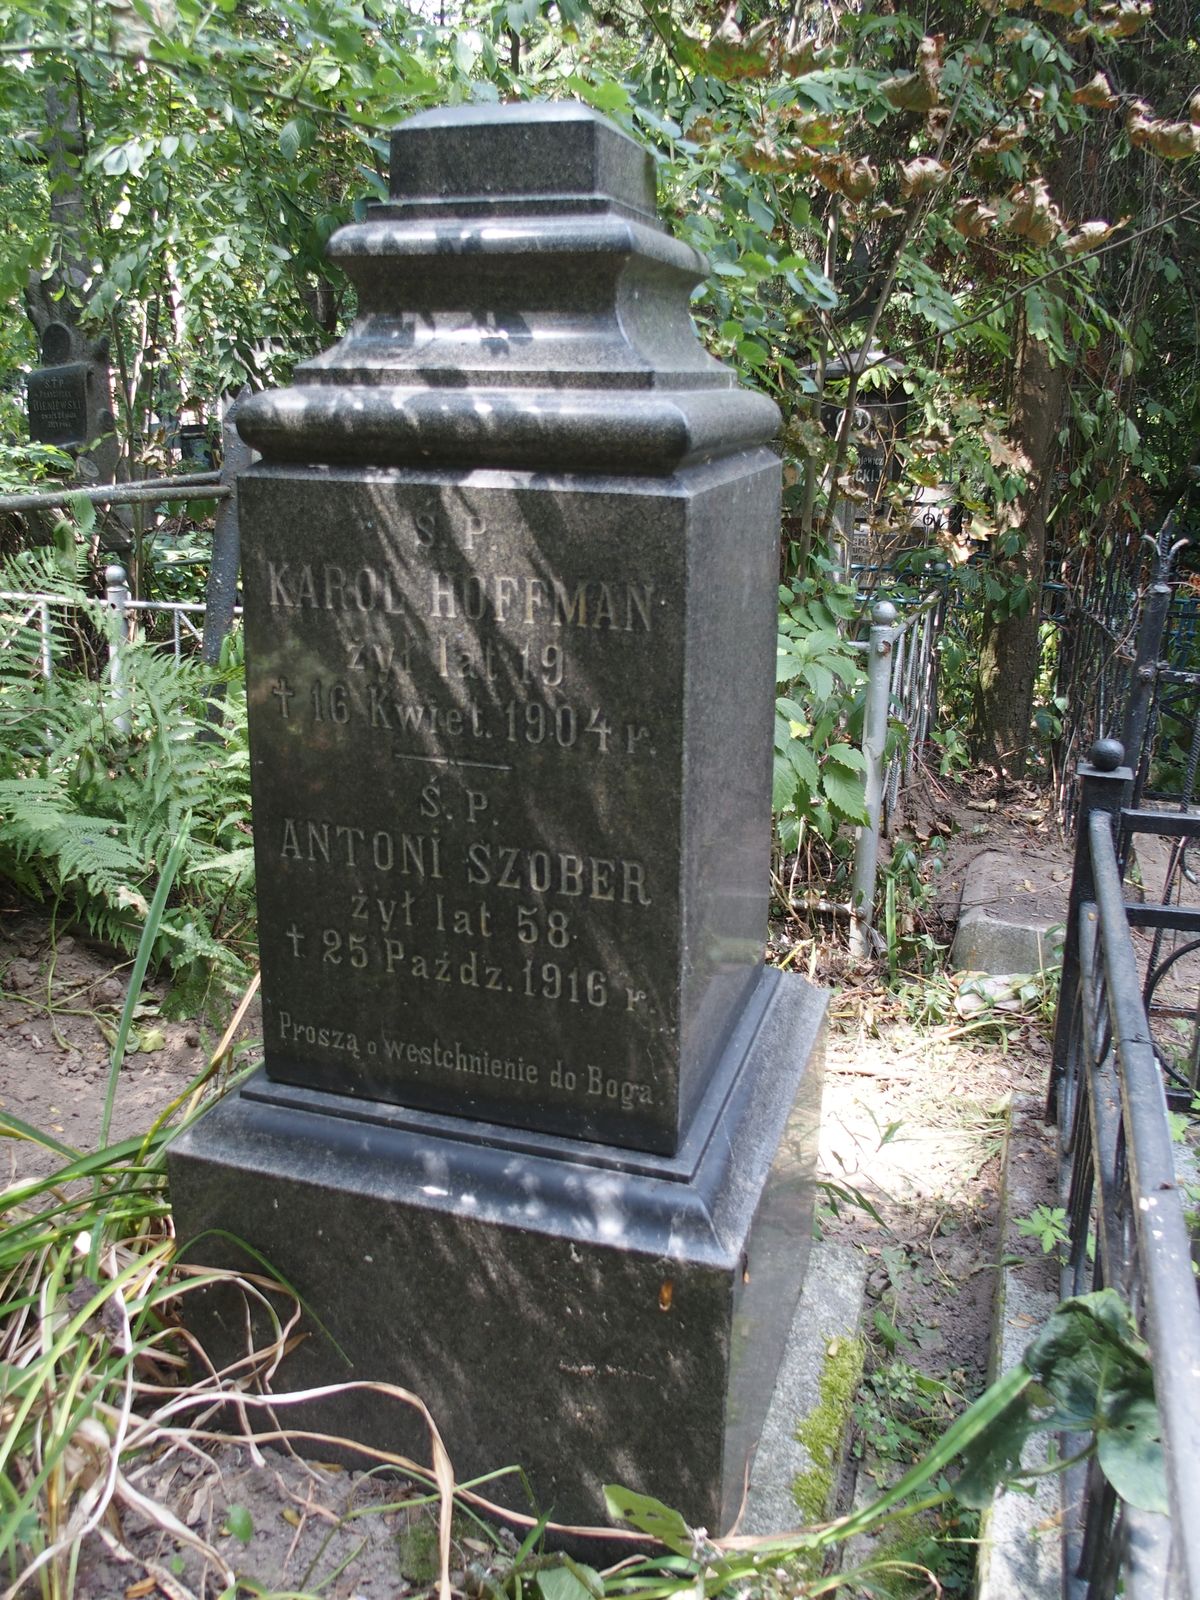 Tombstone of Karol Hoffman, Antoni Szober